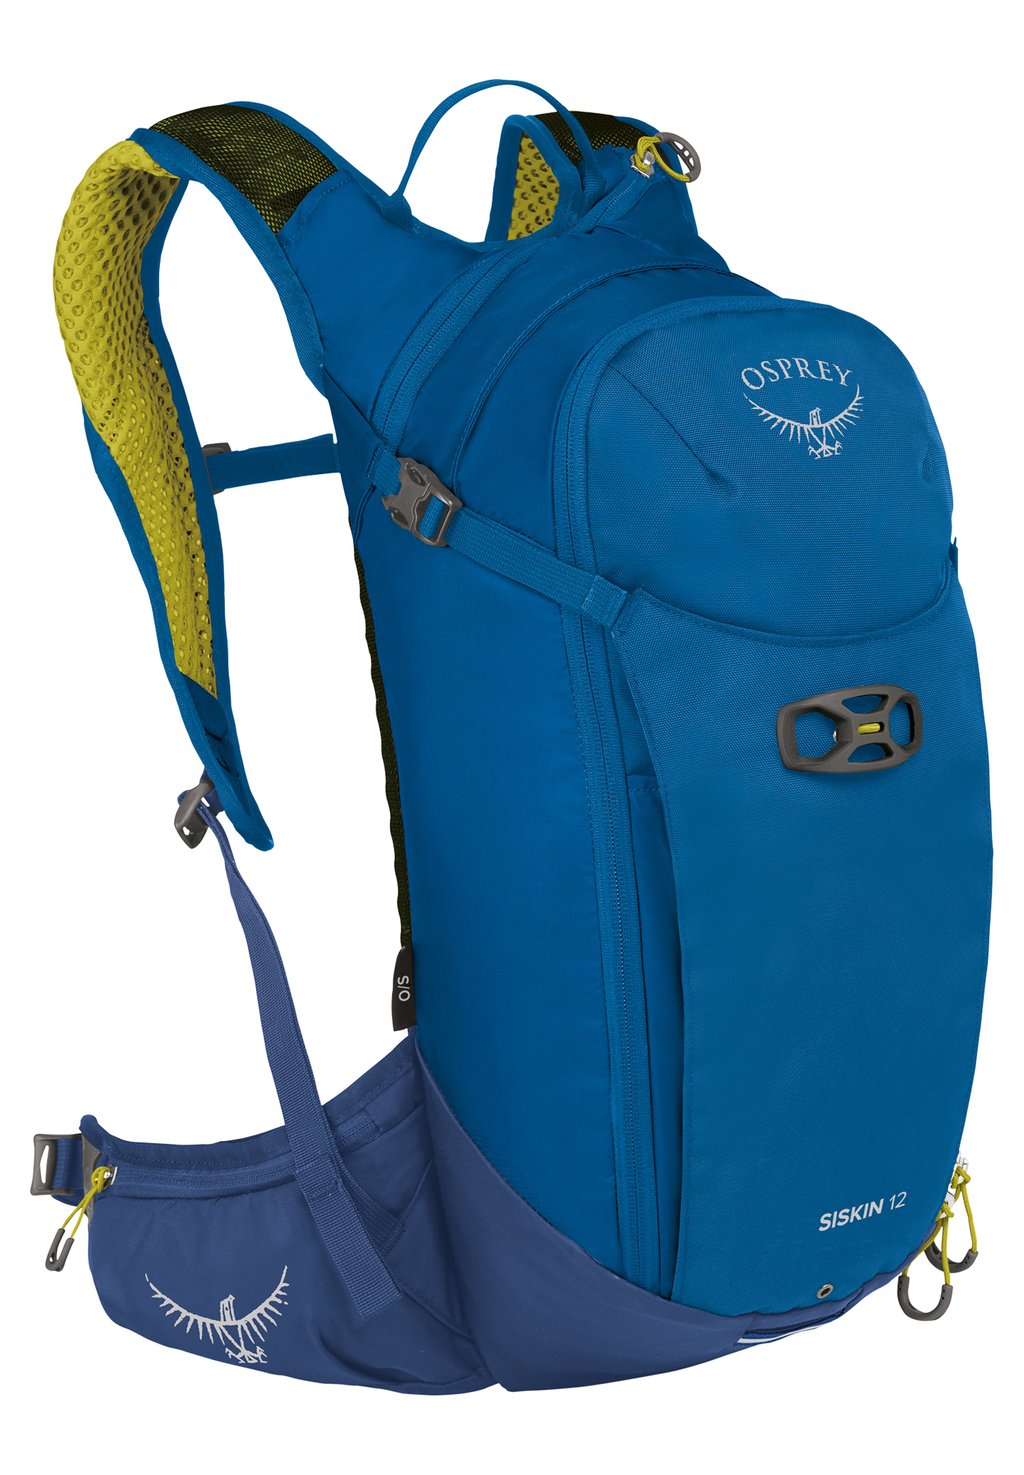 Рюкзак дорожный Siskin 12 Osprey, цвет postal blue